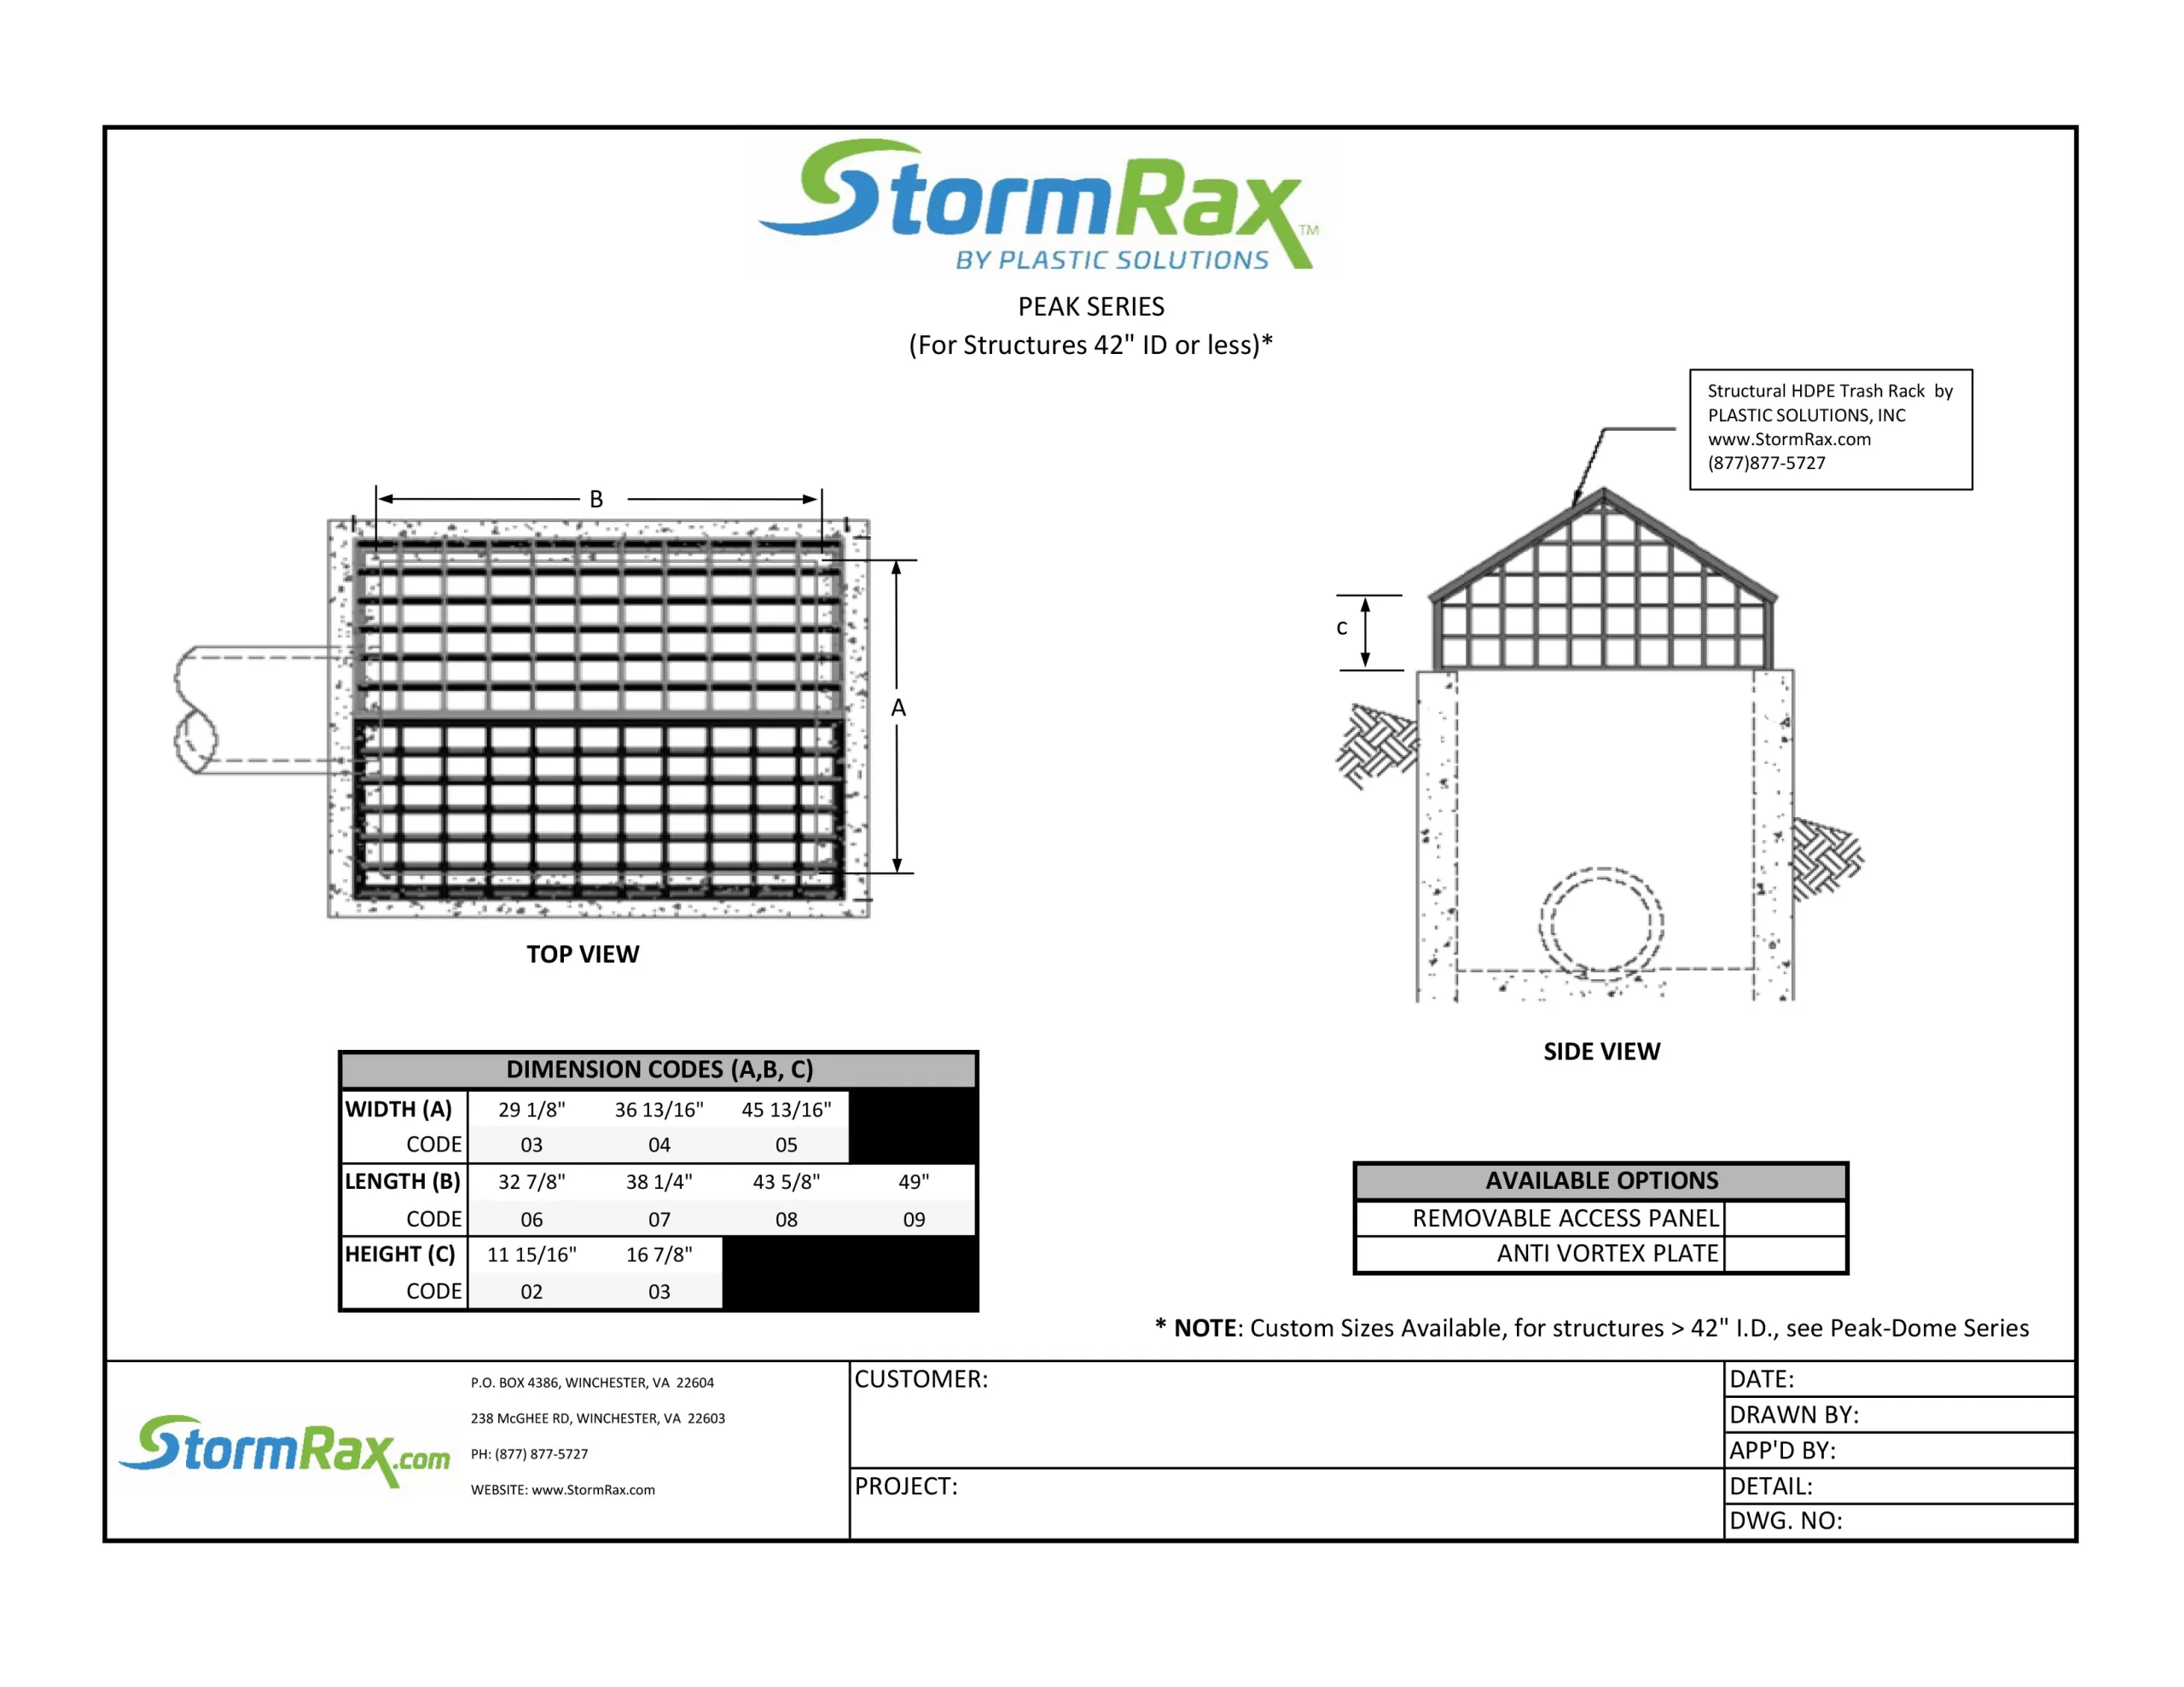 Technical drawing for stormrax peak series